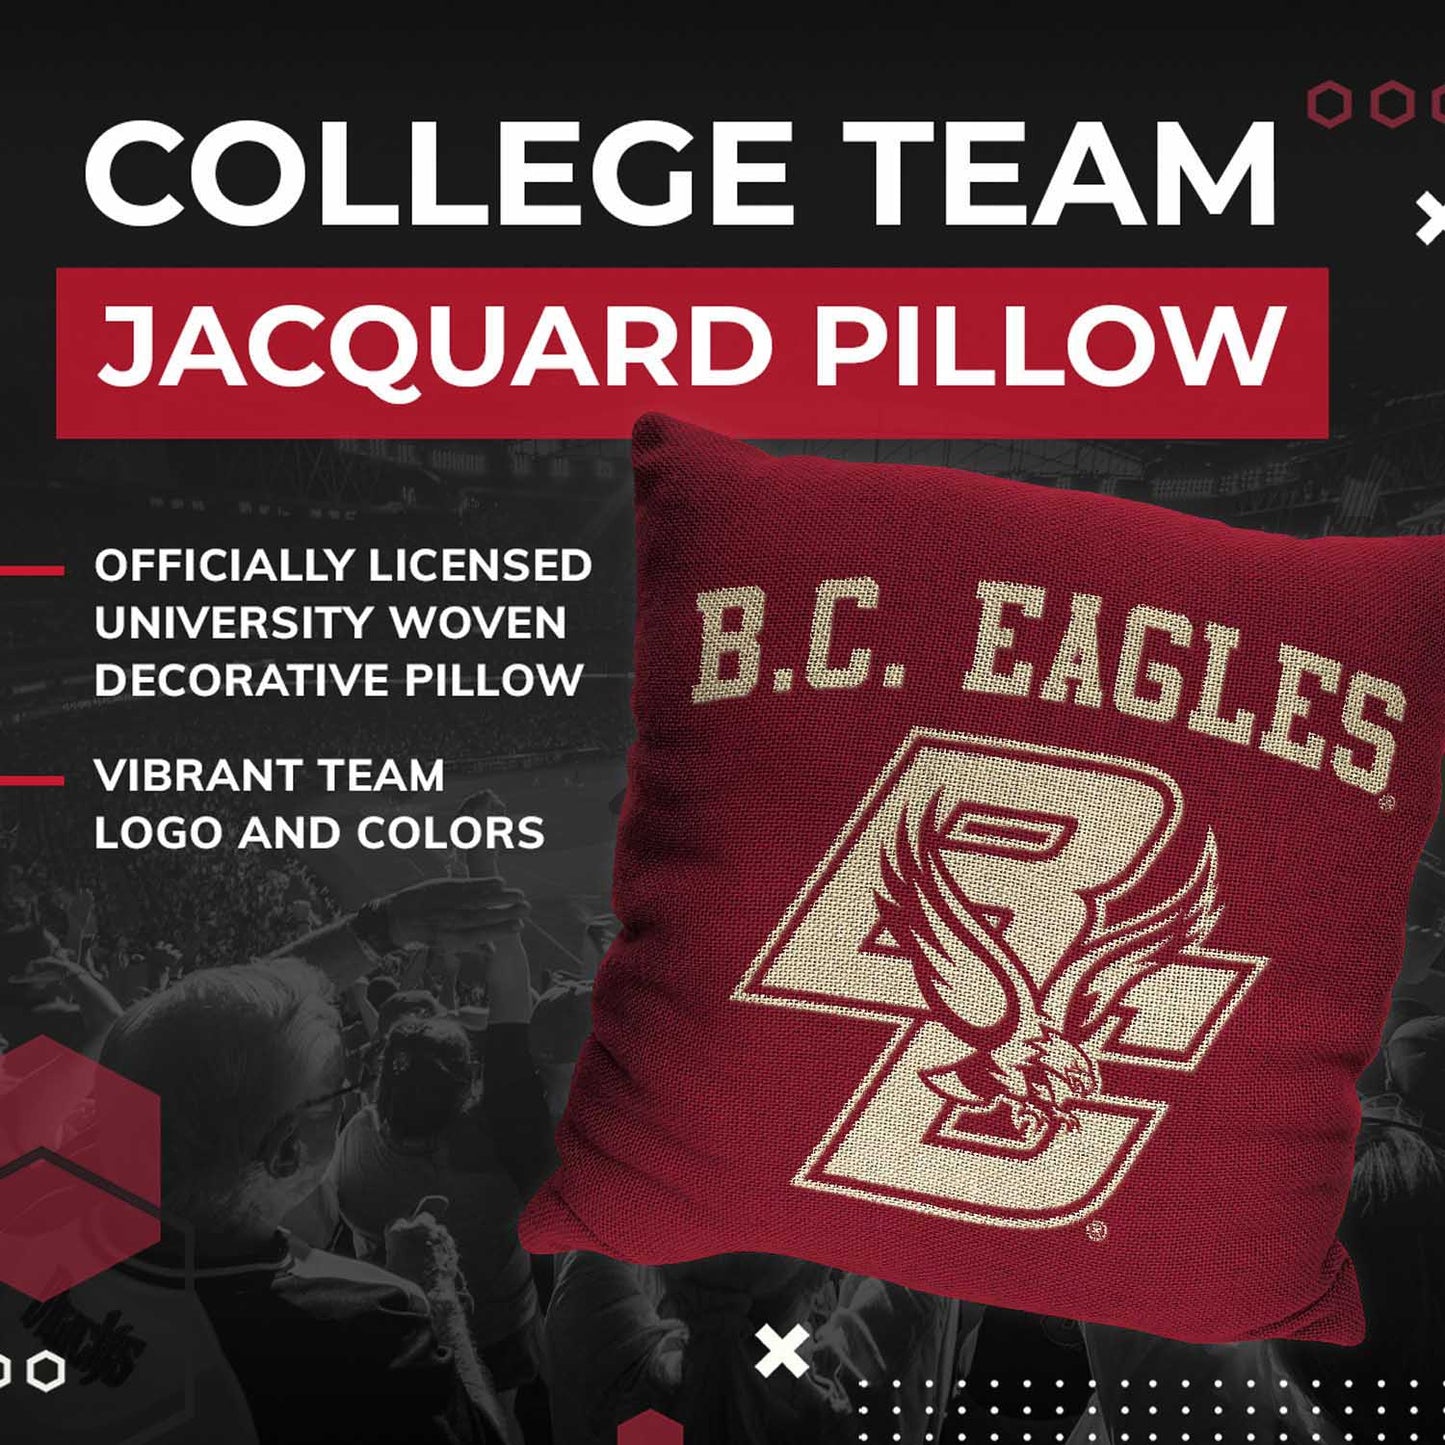 Boston College Eagles NCAA Decorative Pillow - Maroon